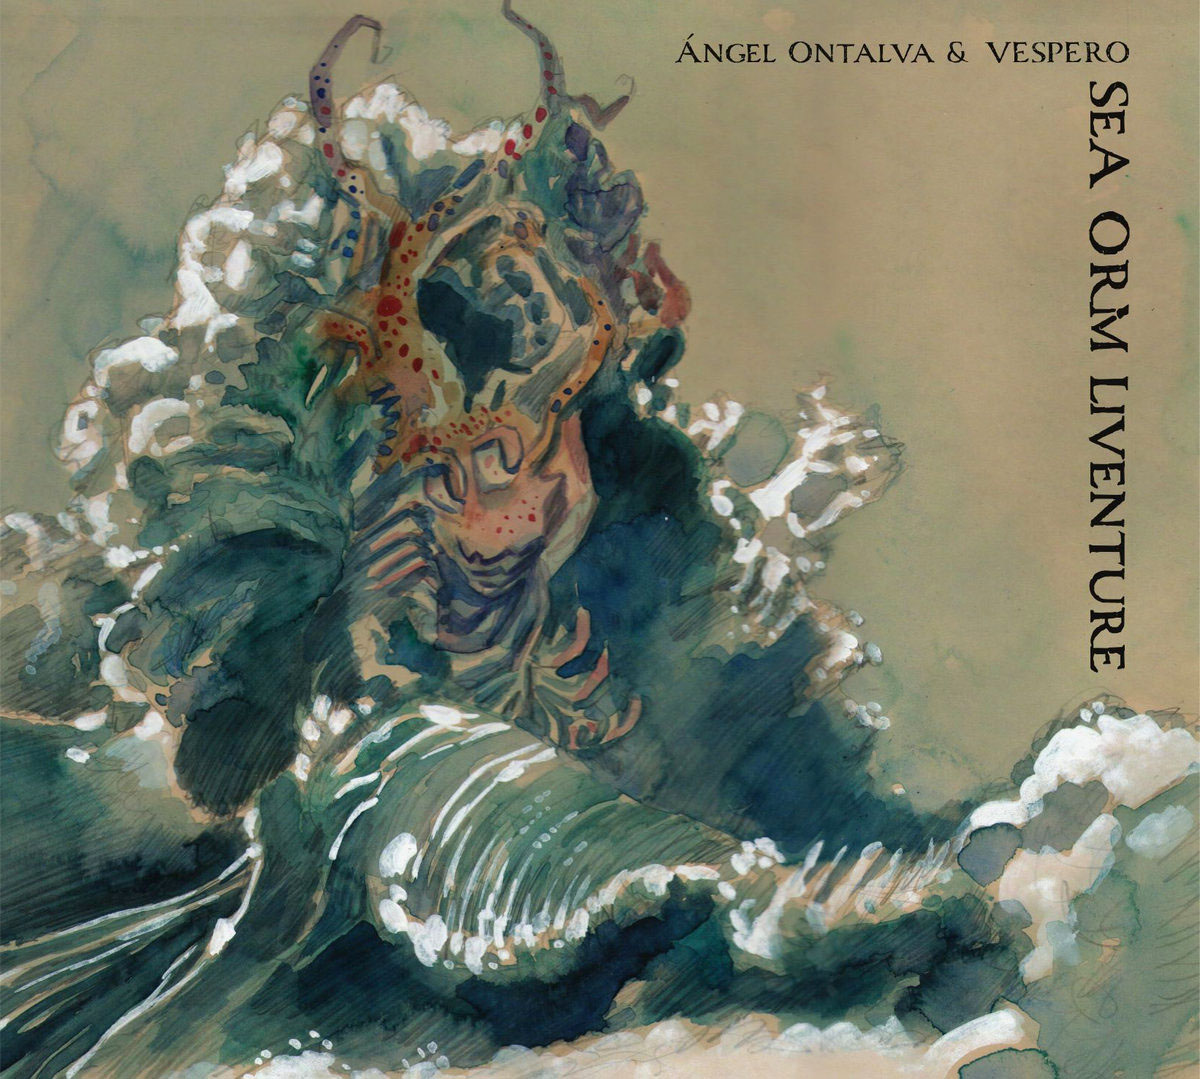 ÁNGEL ONTALVA - Ángel Ontalva & Vespero: Sea Orm Liventure cover 